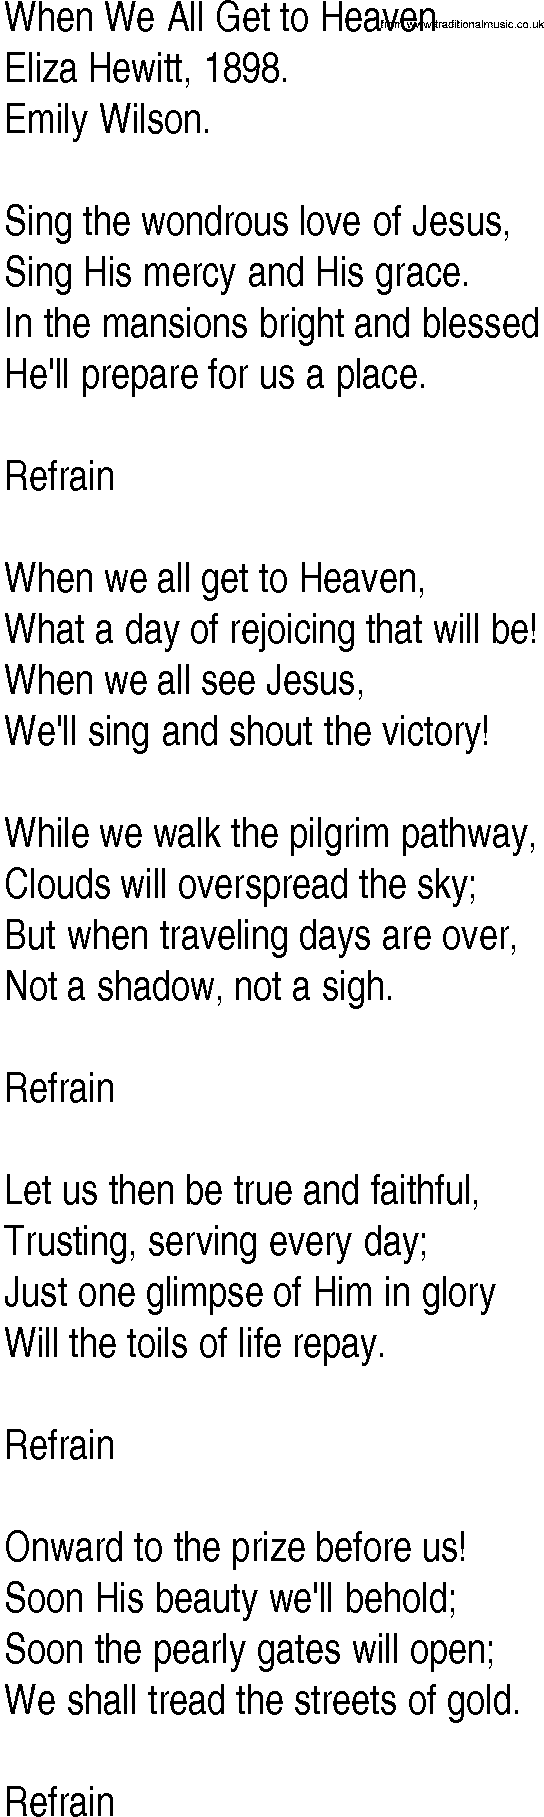 Hymn and Gospel Song: When We All Get to Heaven by Eliza Hewitt lyrics